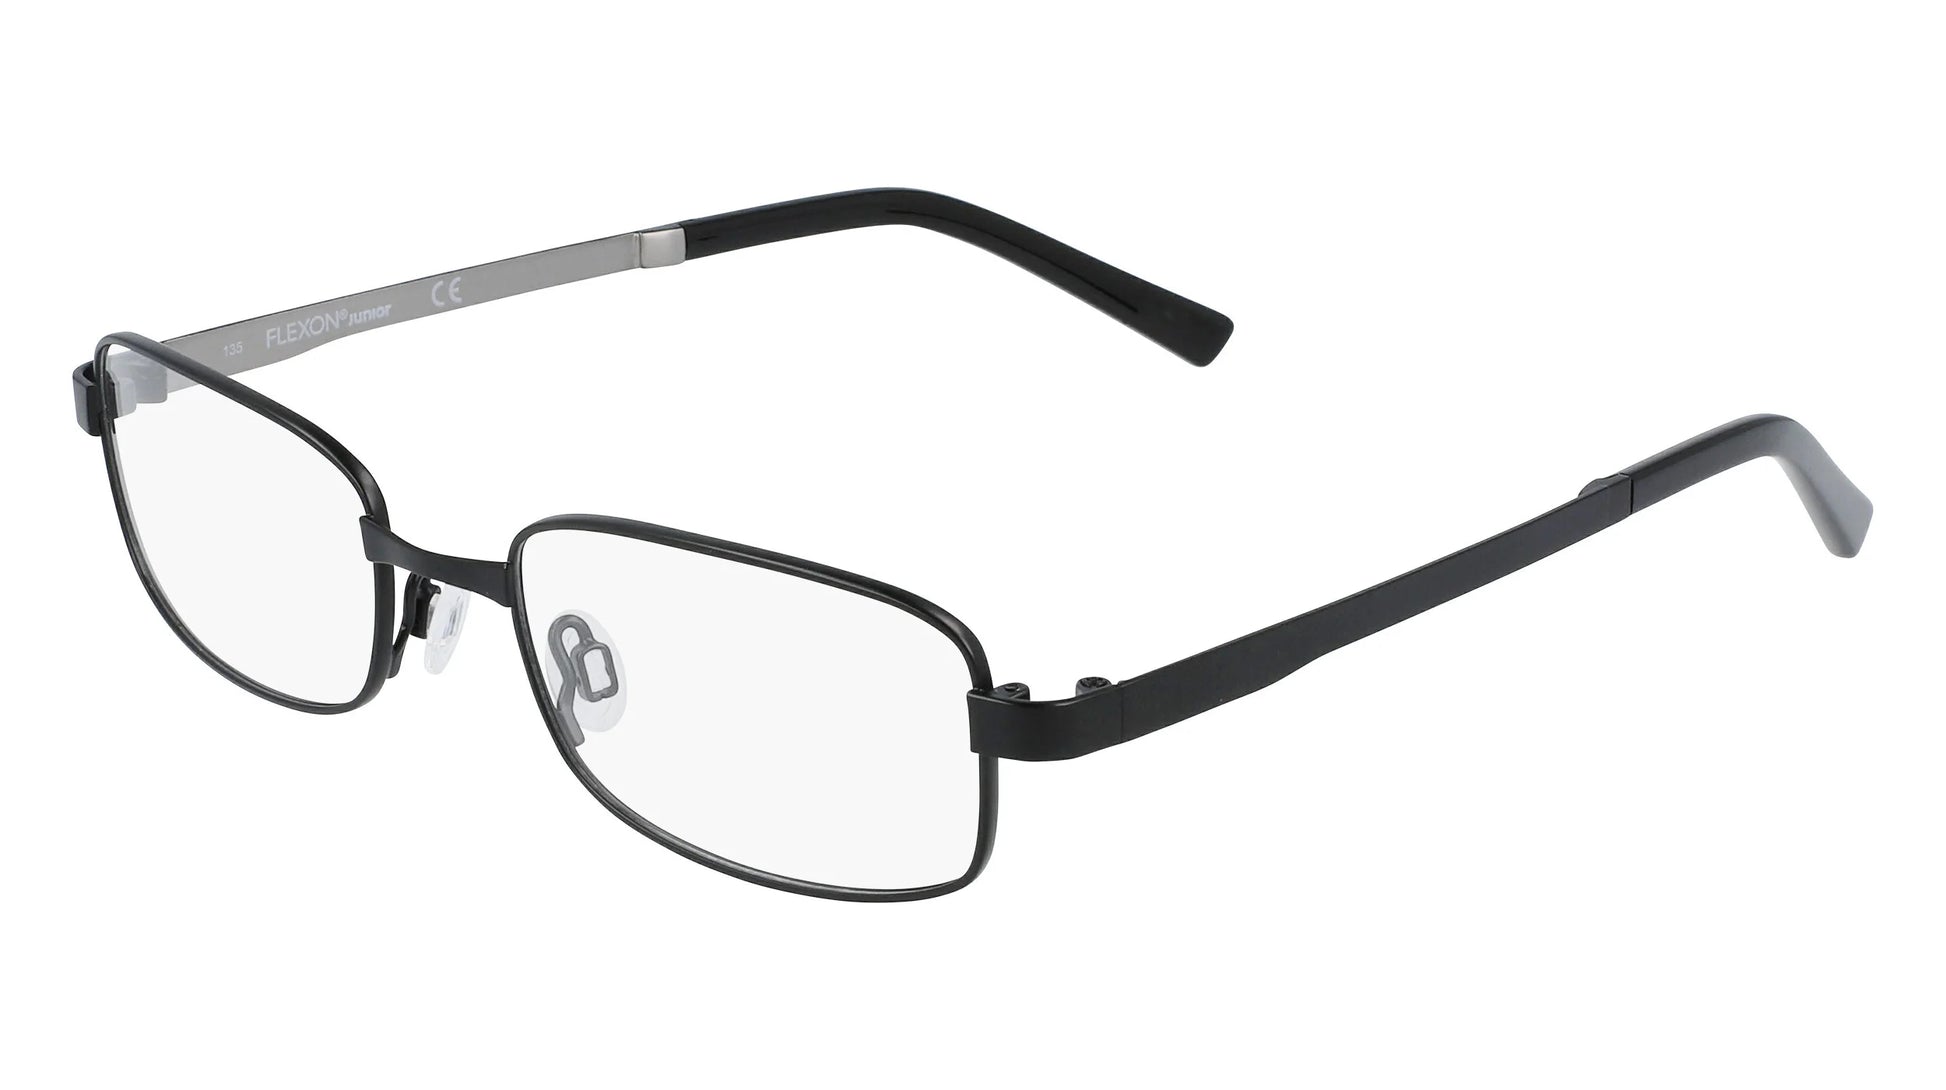 Flexon J4009 Eyeglasses Black